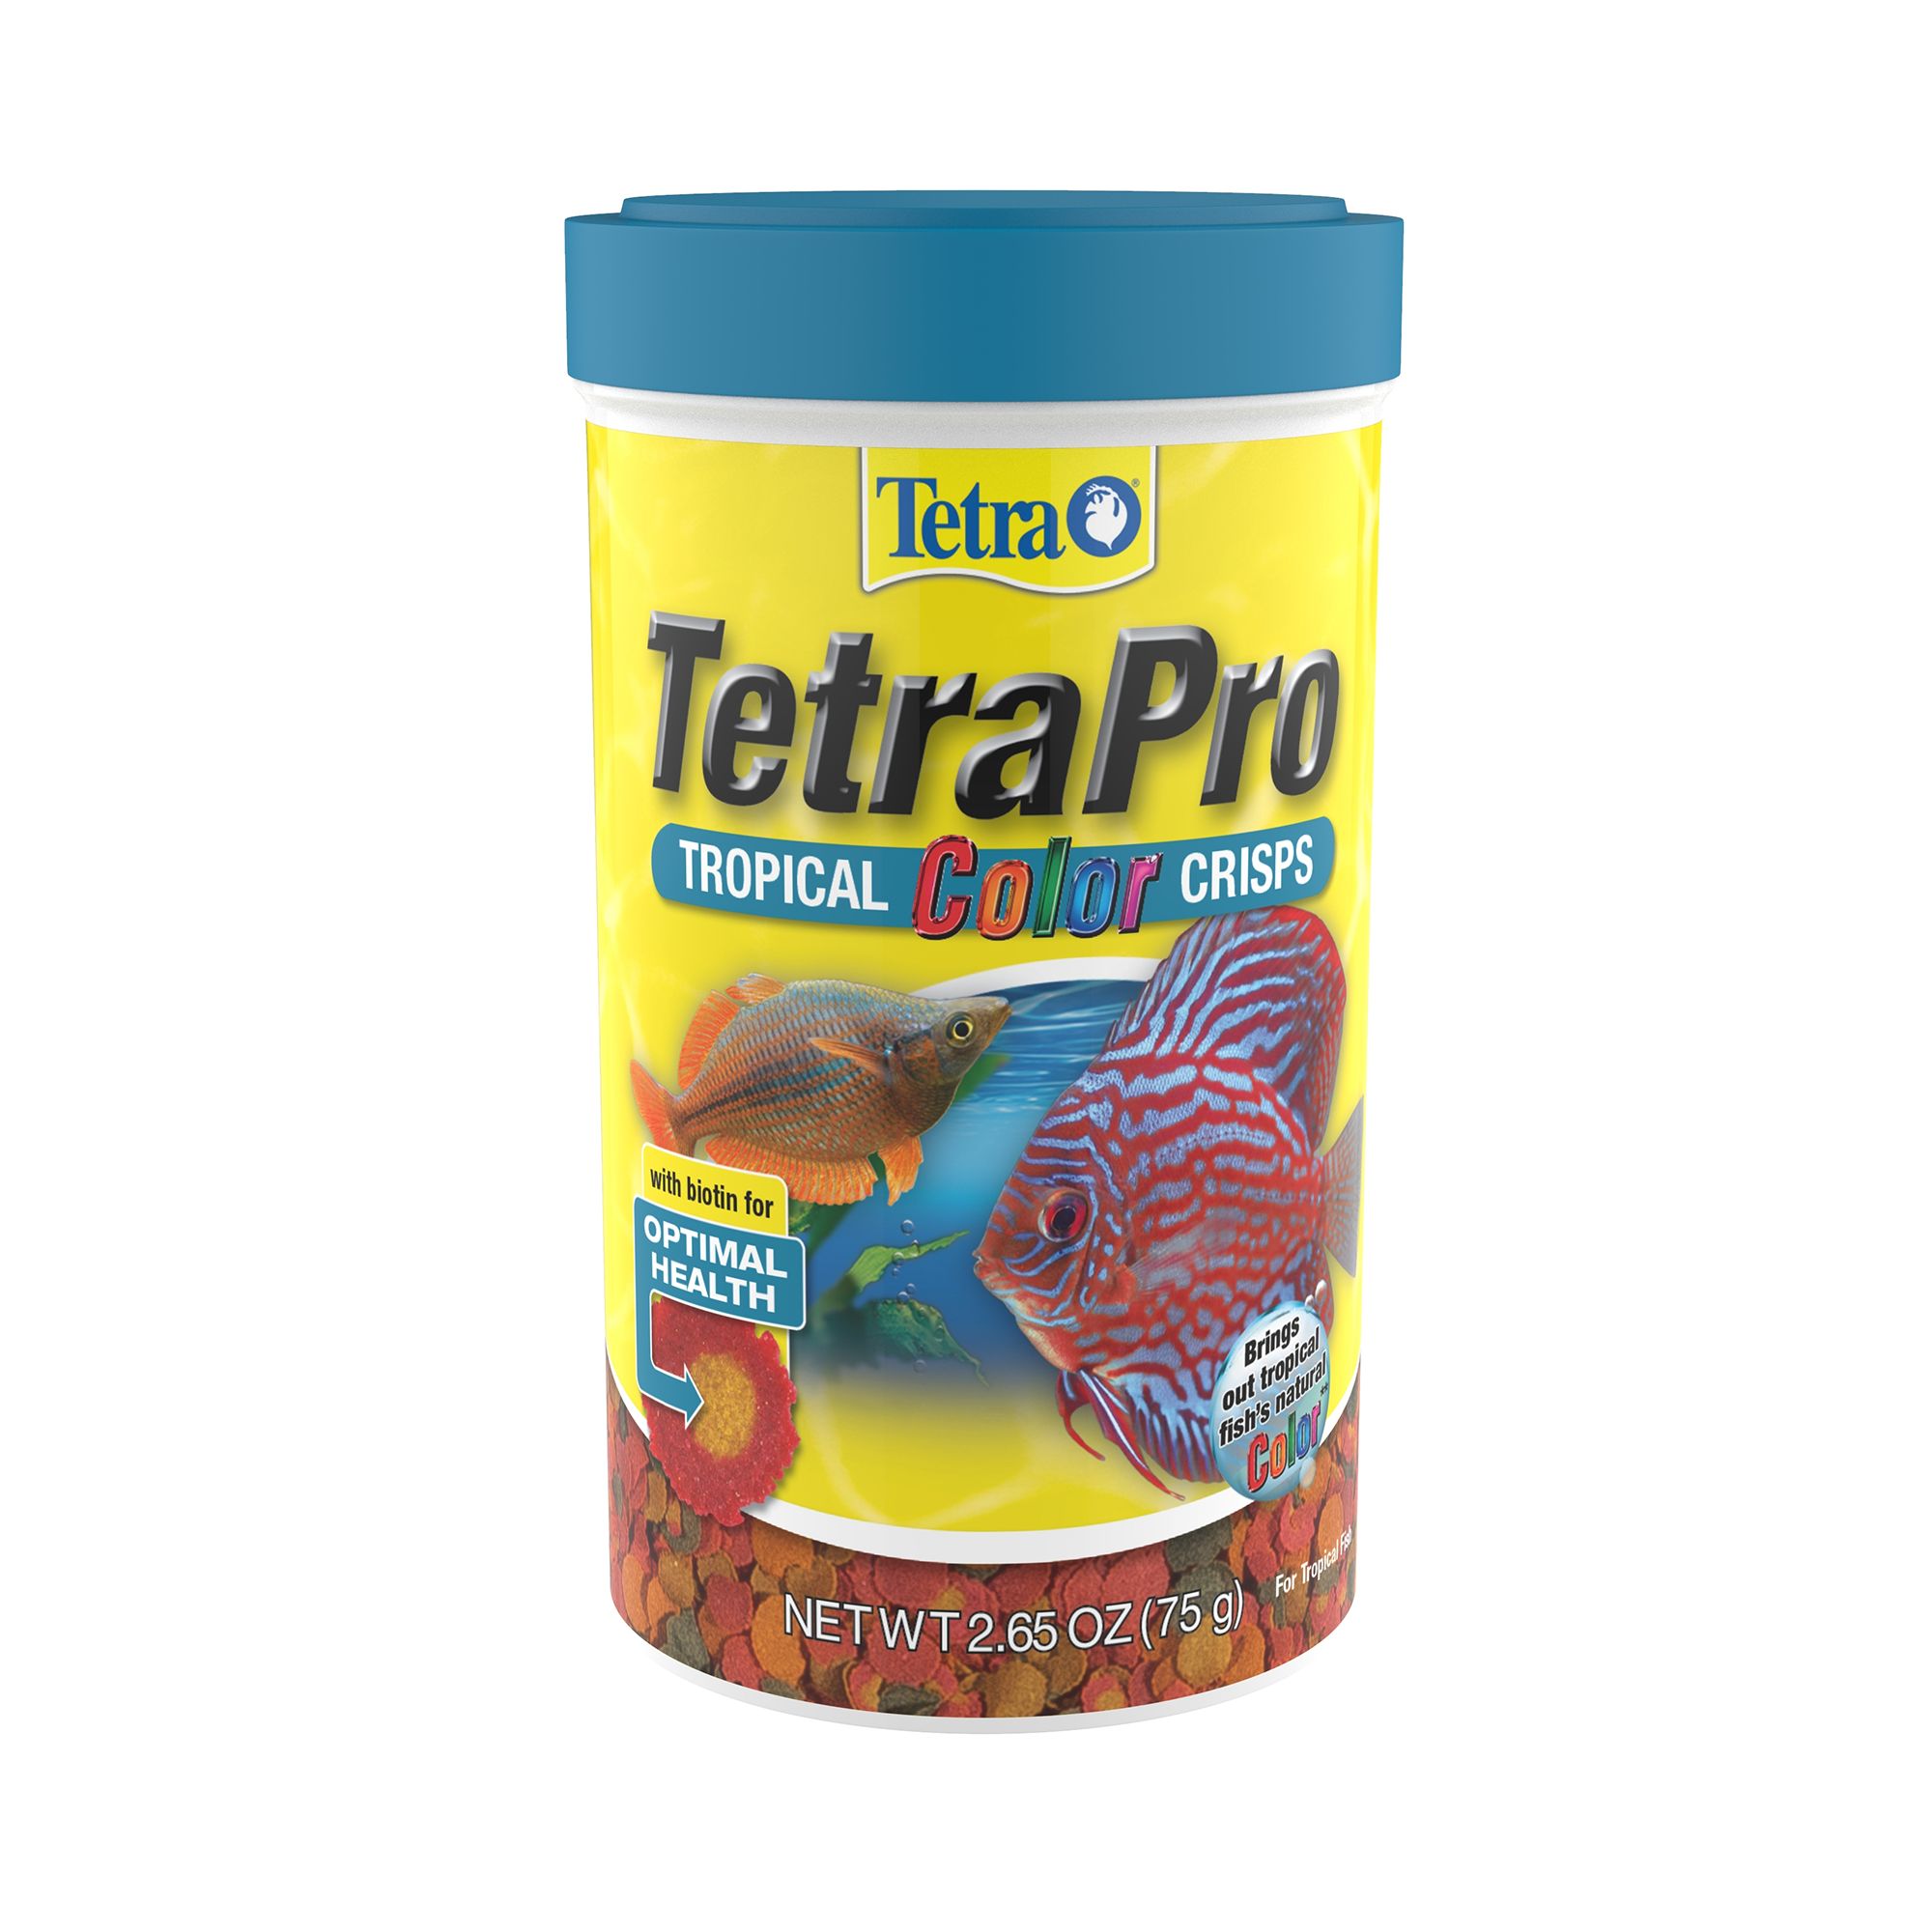 Tetra Tetrapro Energy Multi-Crisps